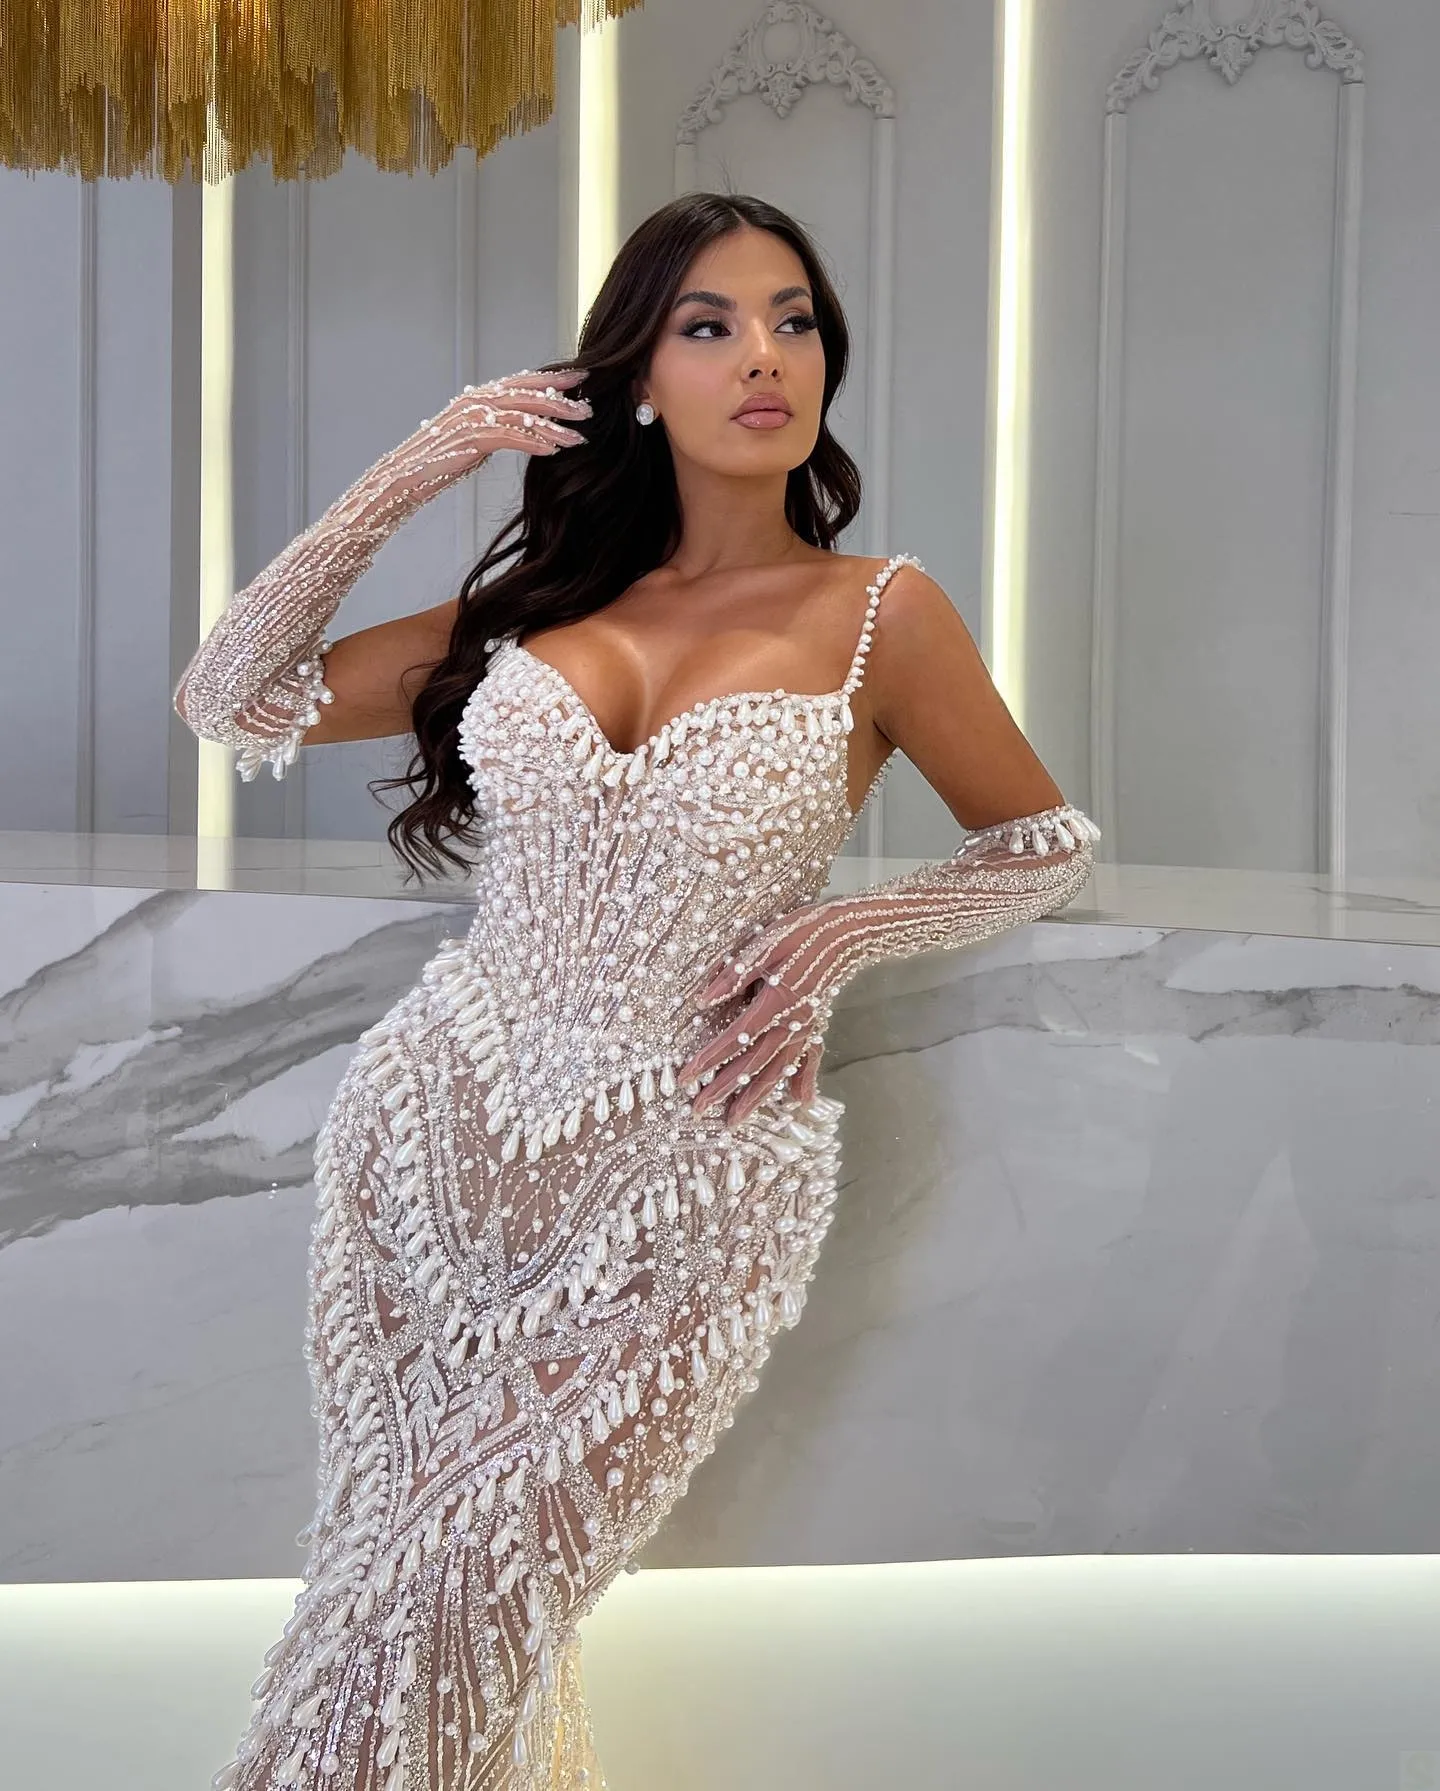 Glamorous Mermaid Illusion Prom Dresses Lace Sequined Party Dresses Spaghetti Straps Sleeveless Custom Made Evening Dress